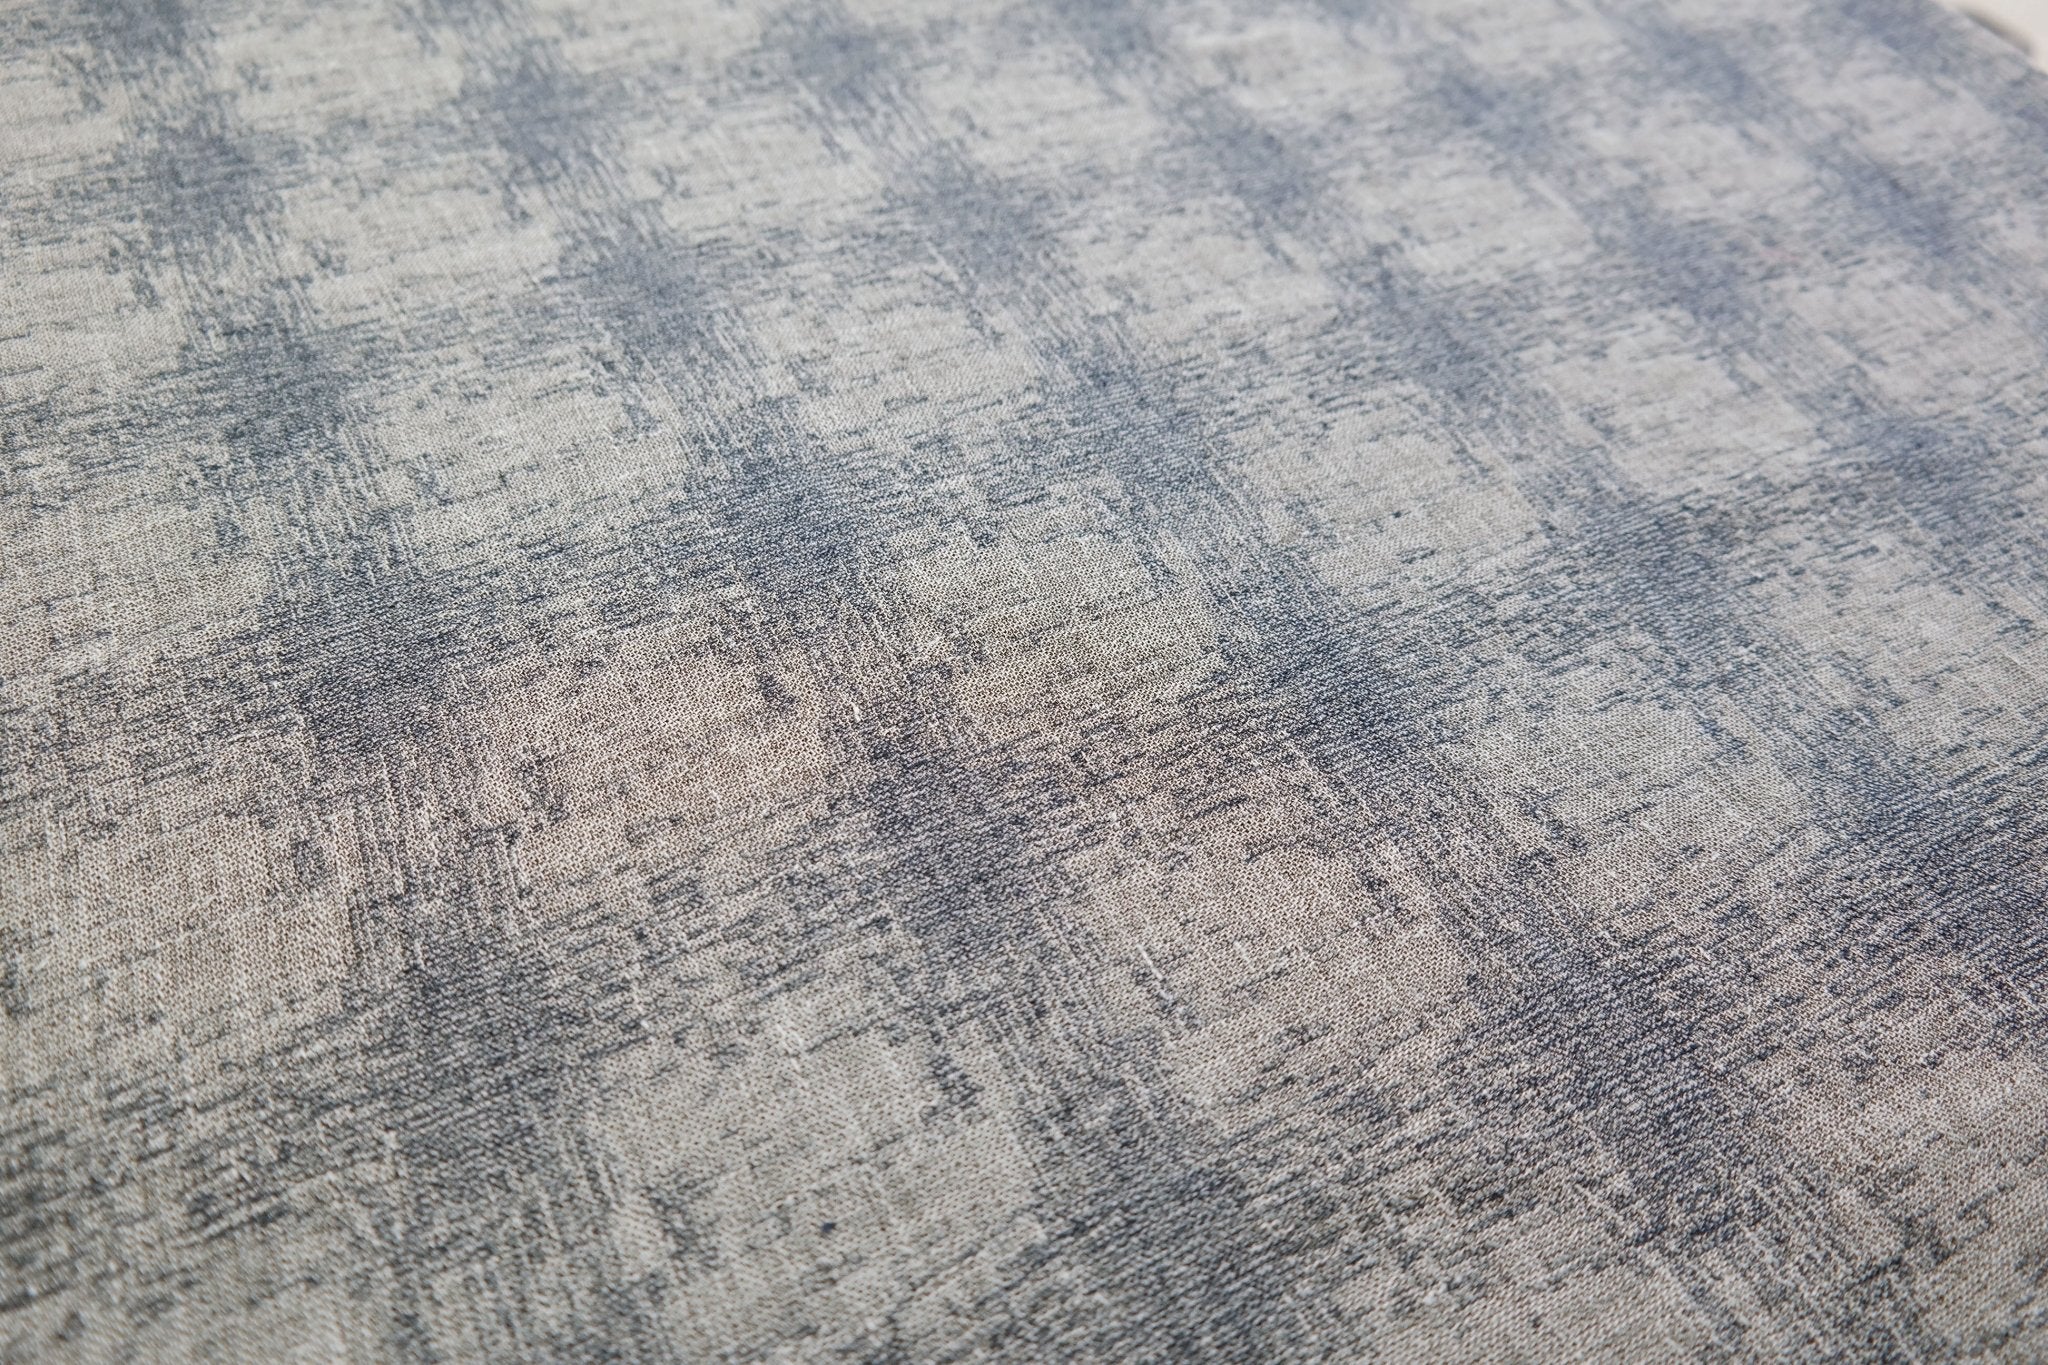 Linen Geometric Jacquard Fabric (6649) - The Linen Lab - Navy